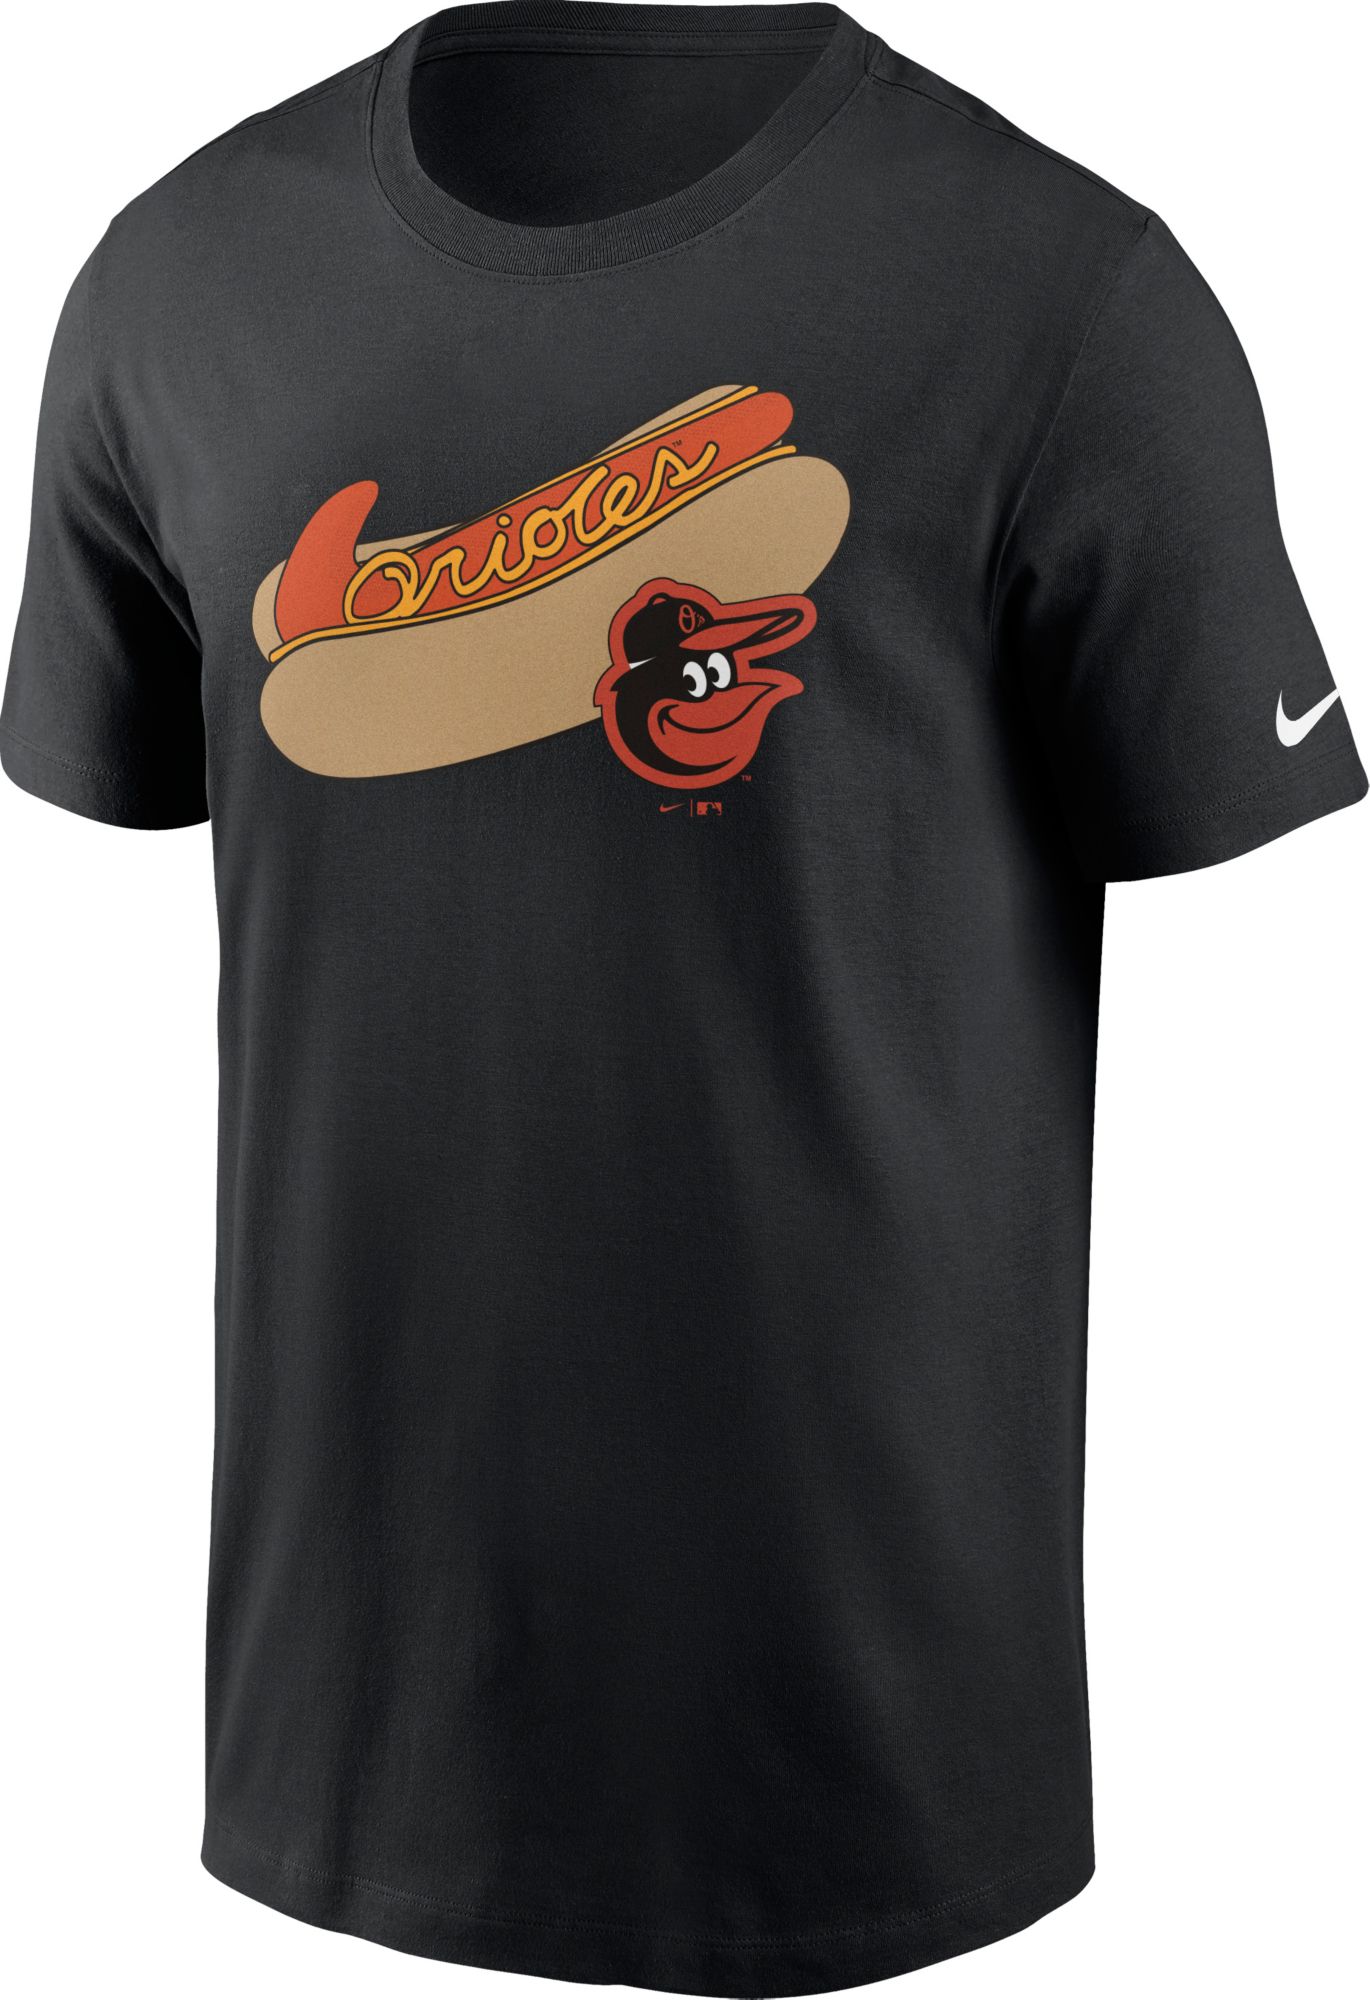 Orioles hot dog race Baltimore Orioles shirt - Yeswefollow